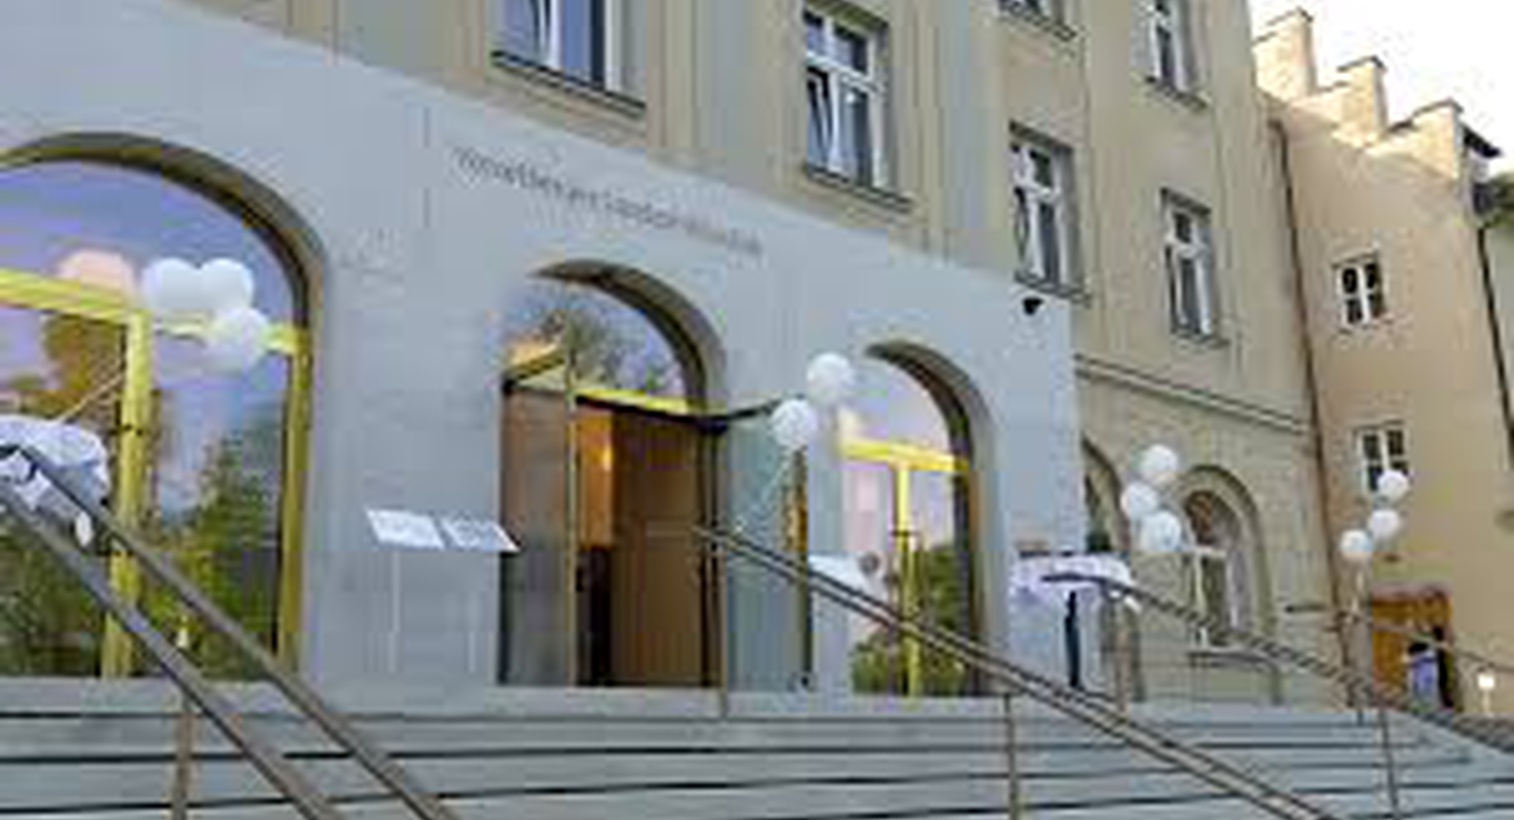 Diplomarbeitsworkshop Landesbibliothek Bregenz